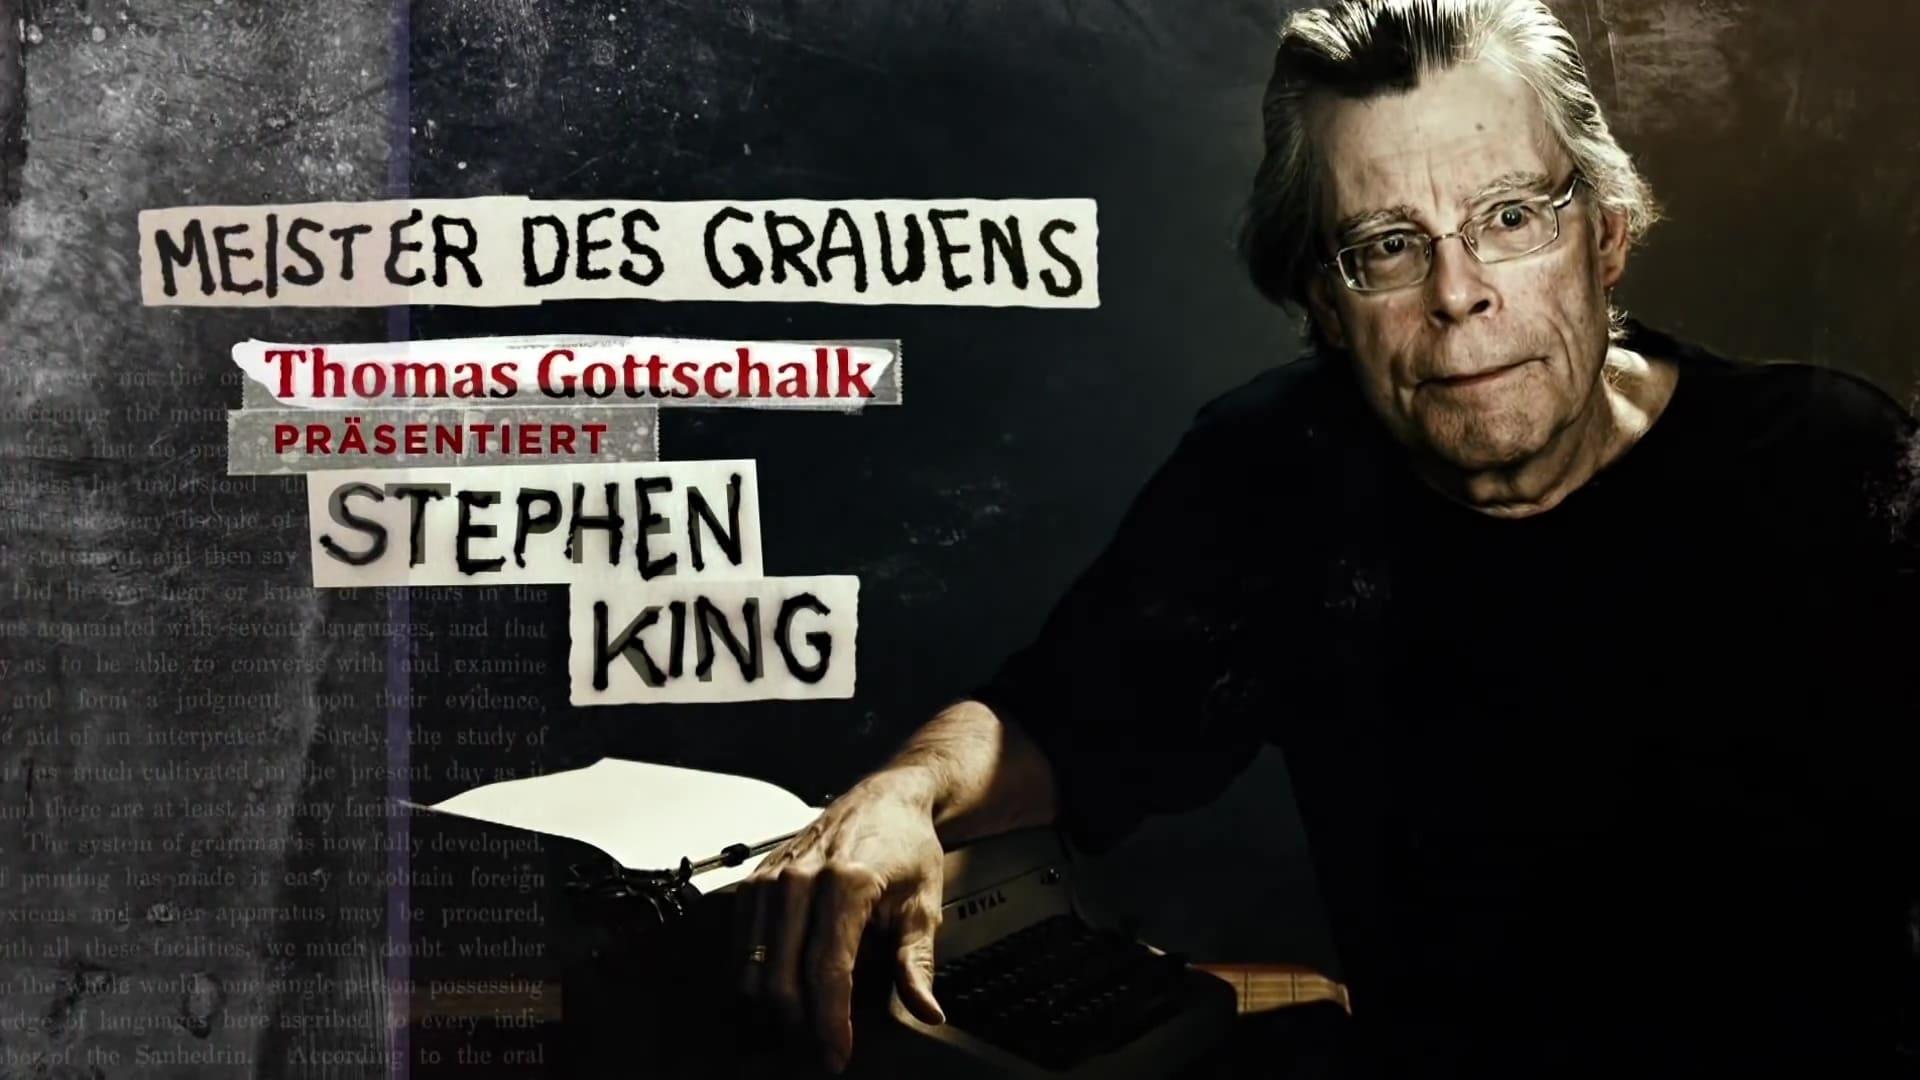 Meister des Grauens - Thomas Gottschalk präsentiert Stephen King backdrop